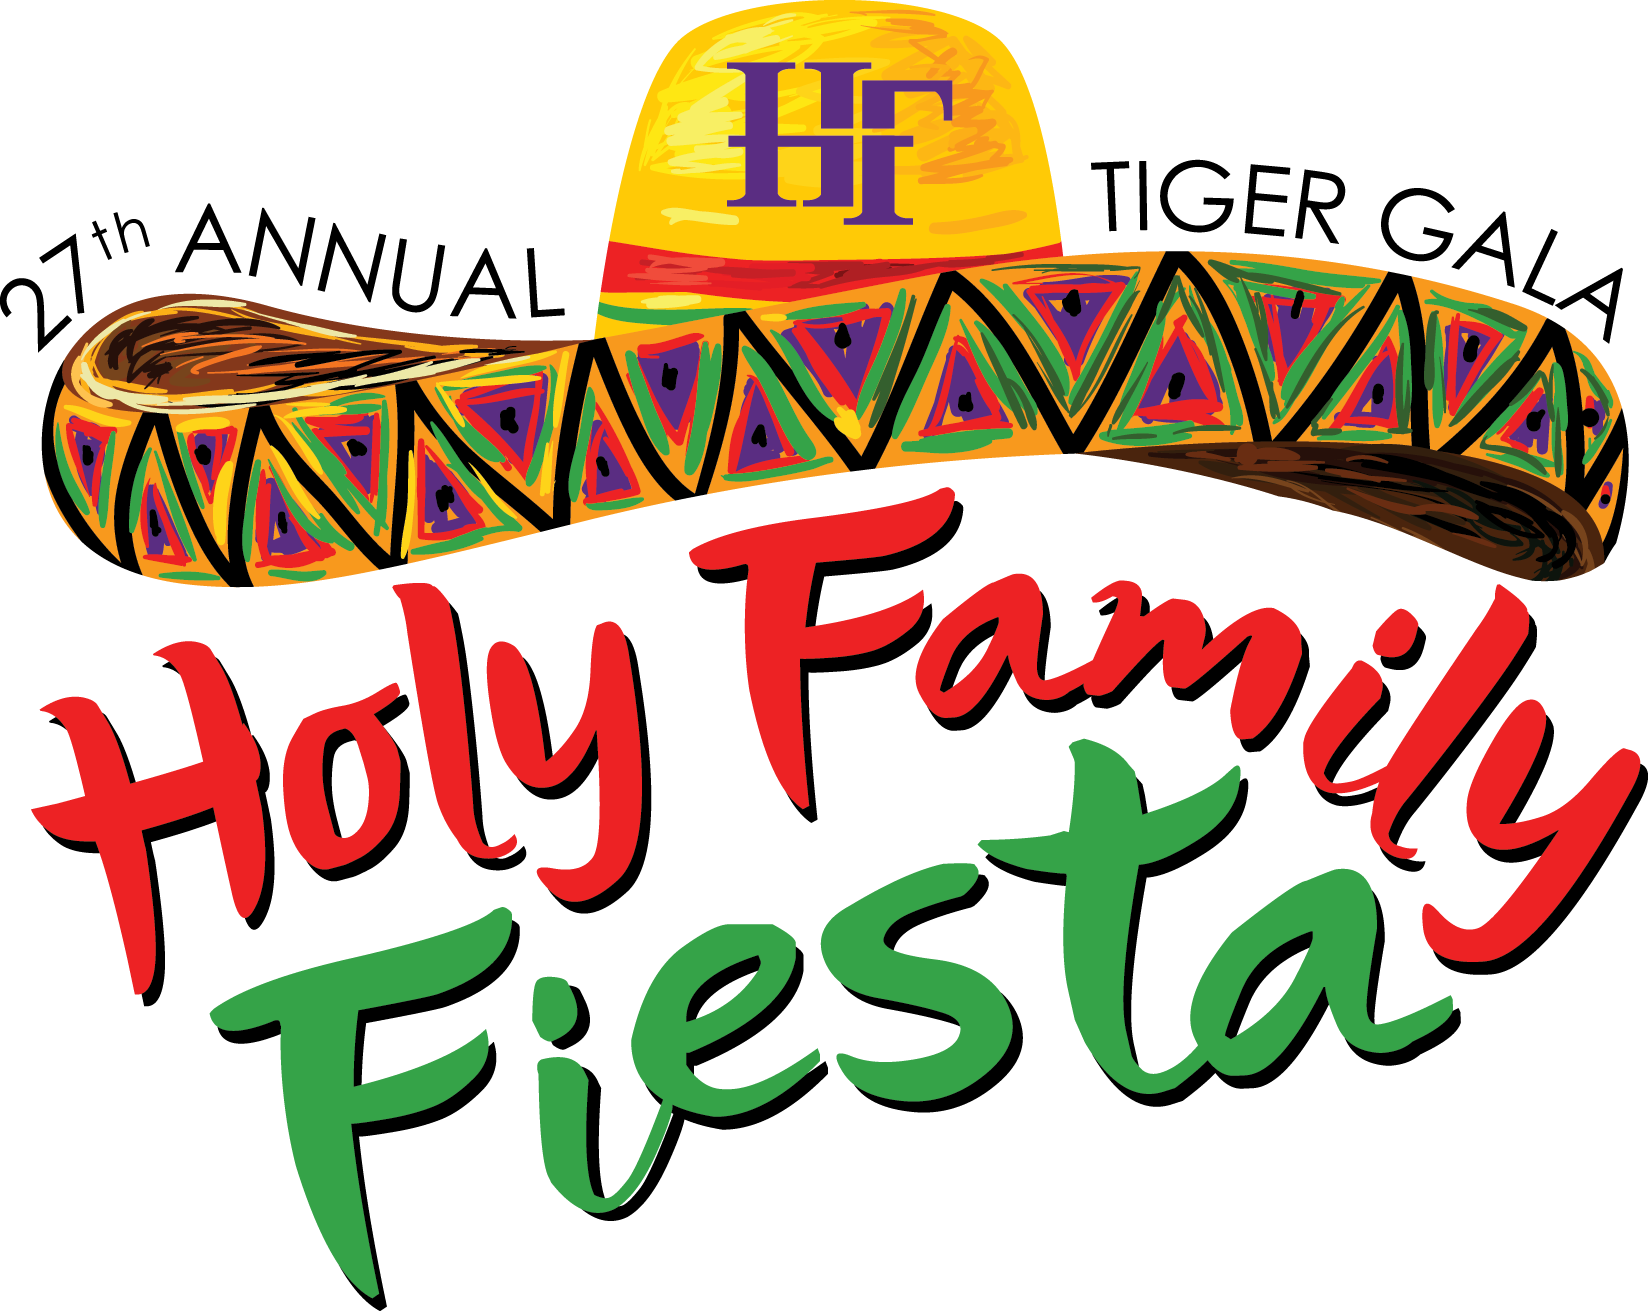 Hf Tiger Gala 2018 Final Logo - Holy Family High School (1648x1311)